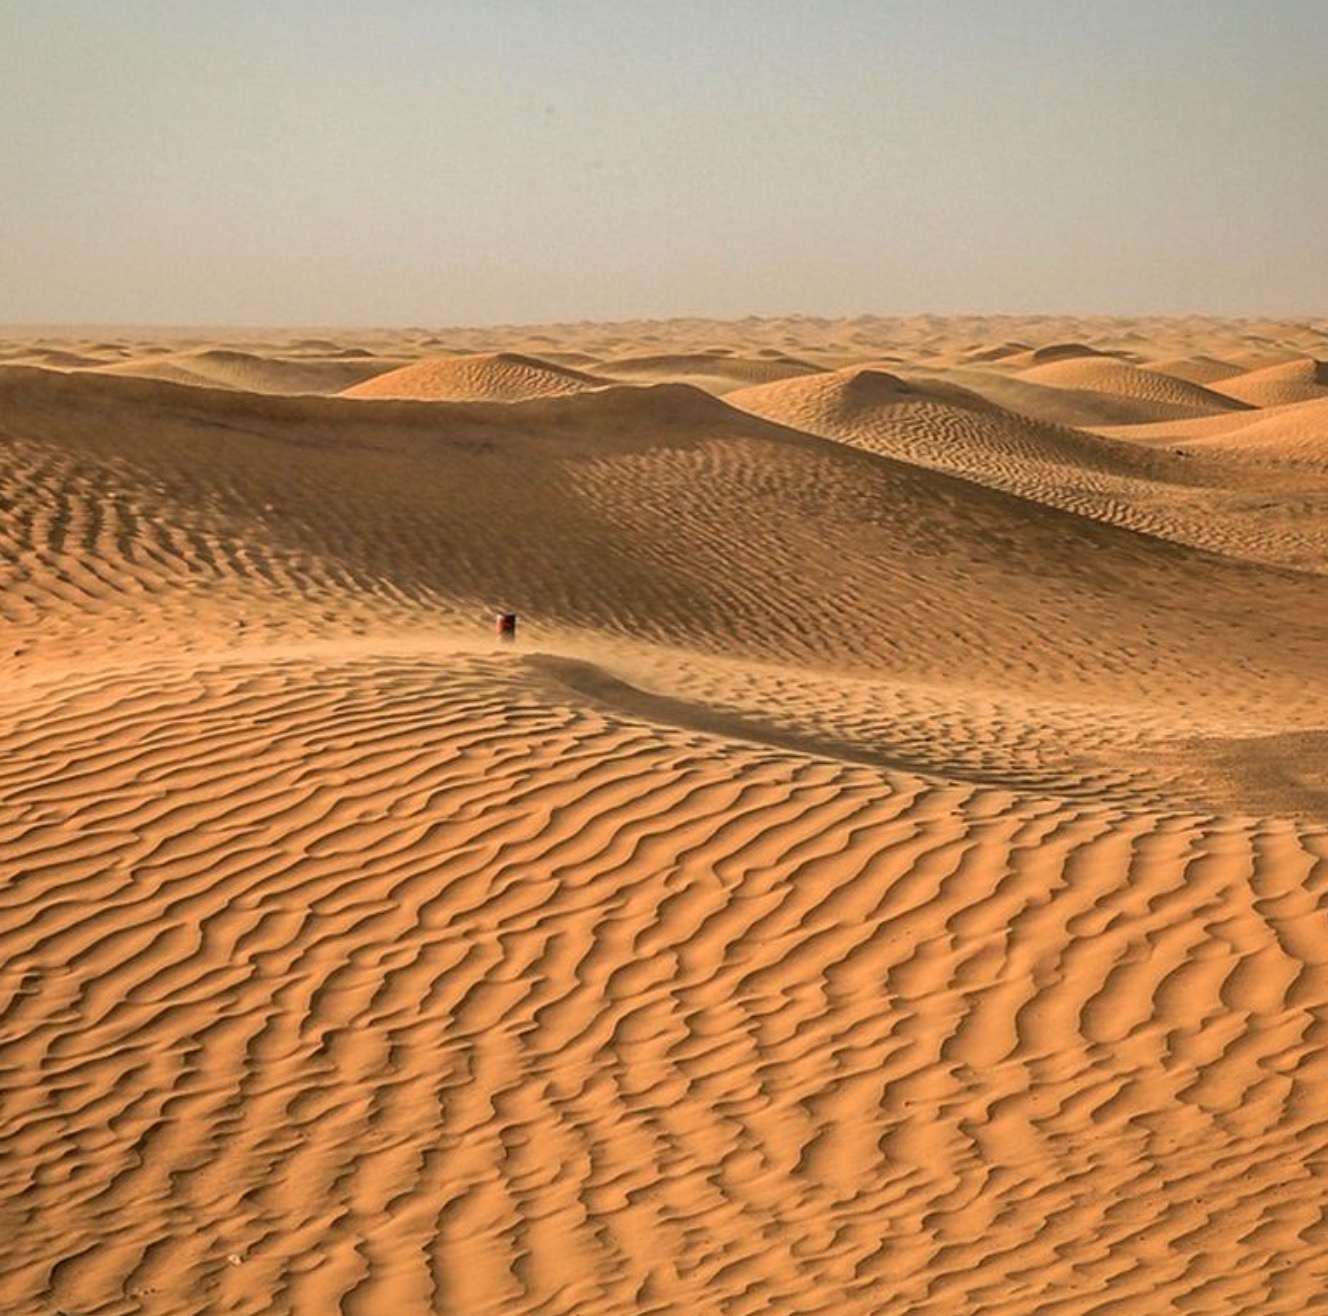 Penemuan Pasir Biru Berkilauan Di Gurun Sahara, Dipercayai Di Kawasan Belum Pernah Diterokai Manusia - nangtime.com